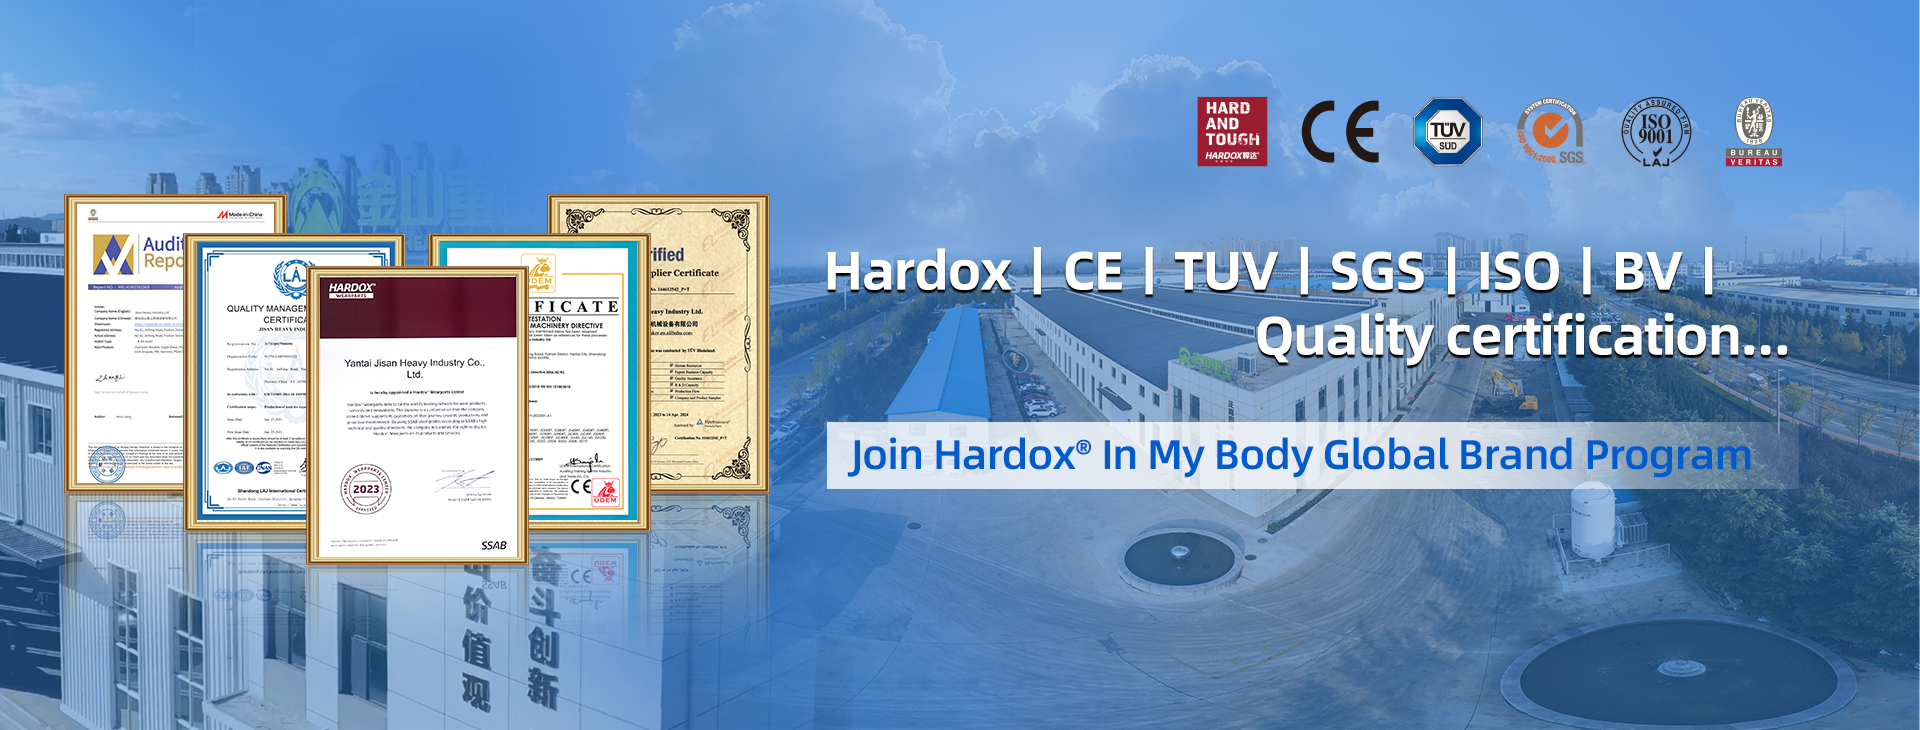 jisan Hardox Quality certification